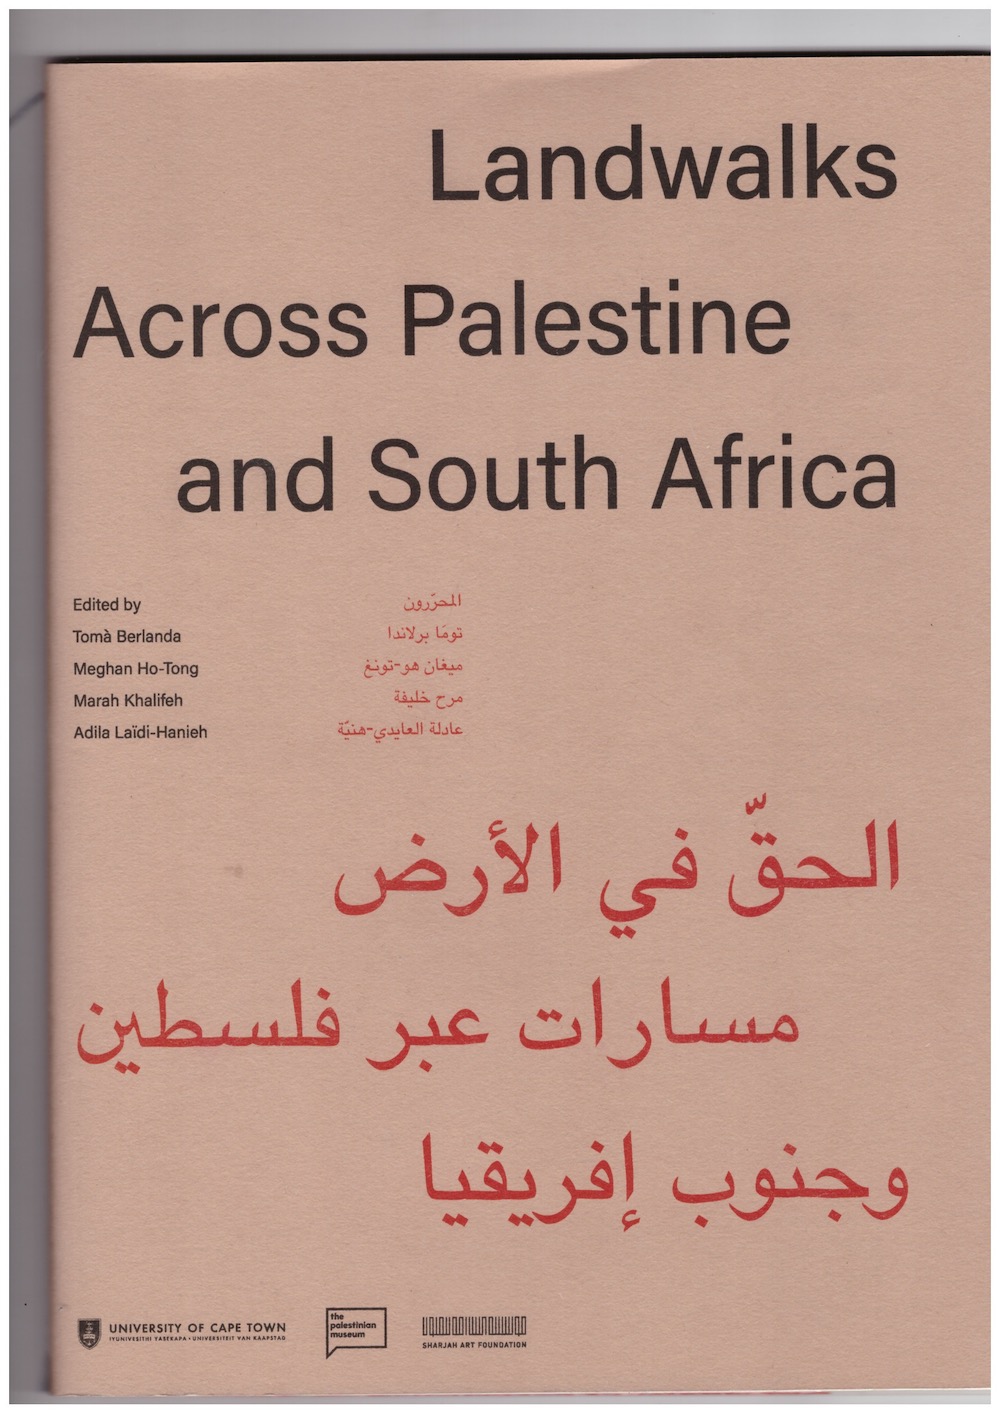 BERLANDA, Tomà: HO-TONG, Meghan; KHALIFEH, Marah; LAÏDI-HANIEH, Adila (eds.) - Landwalks: Across Palestine and South Africa